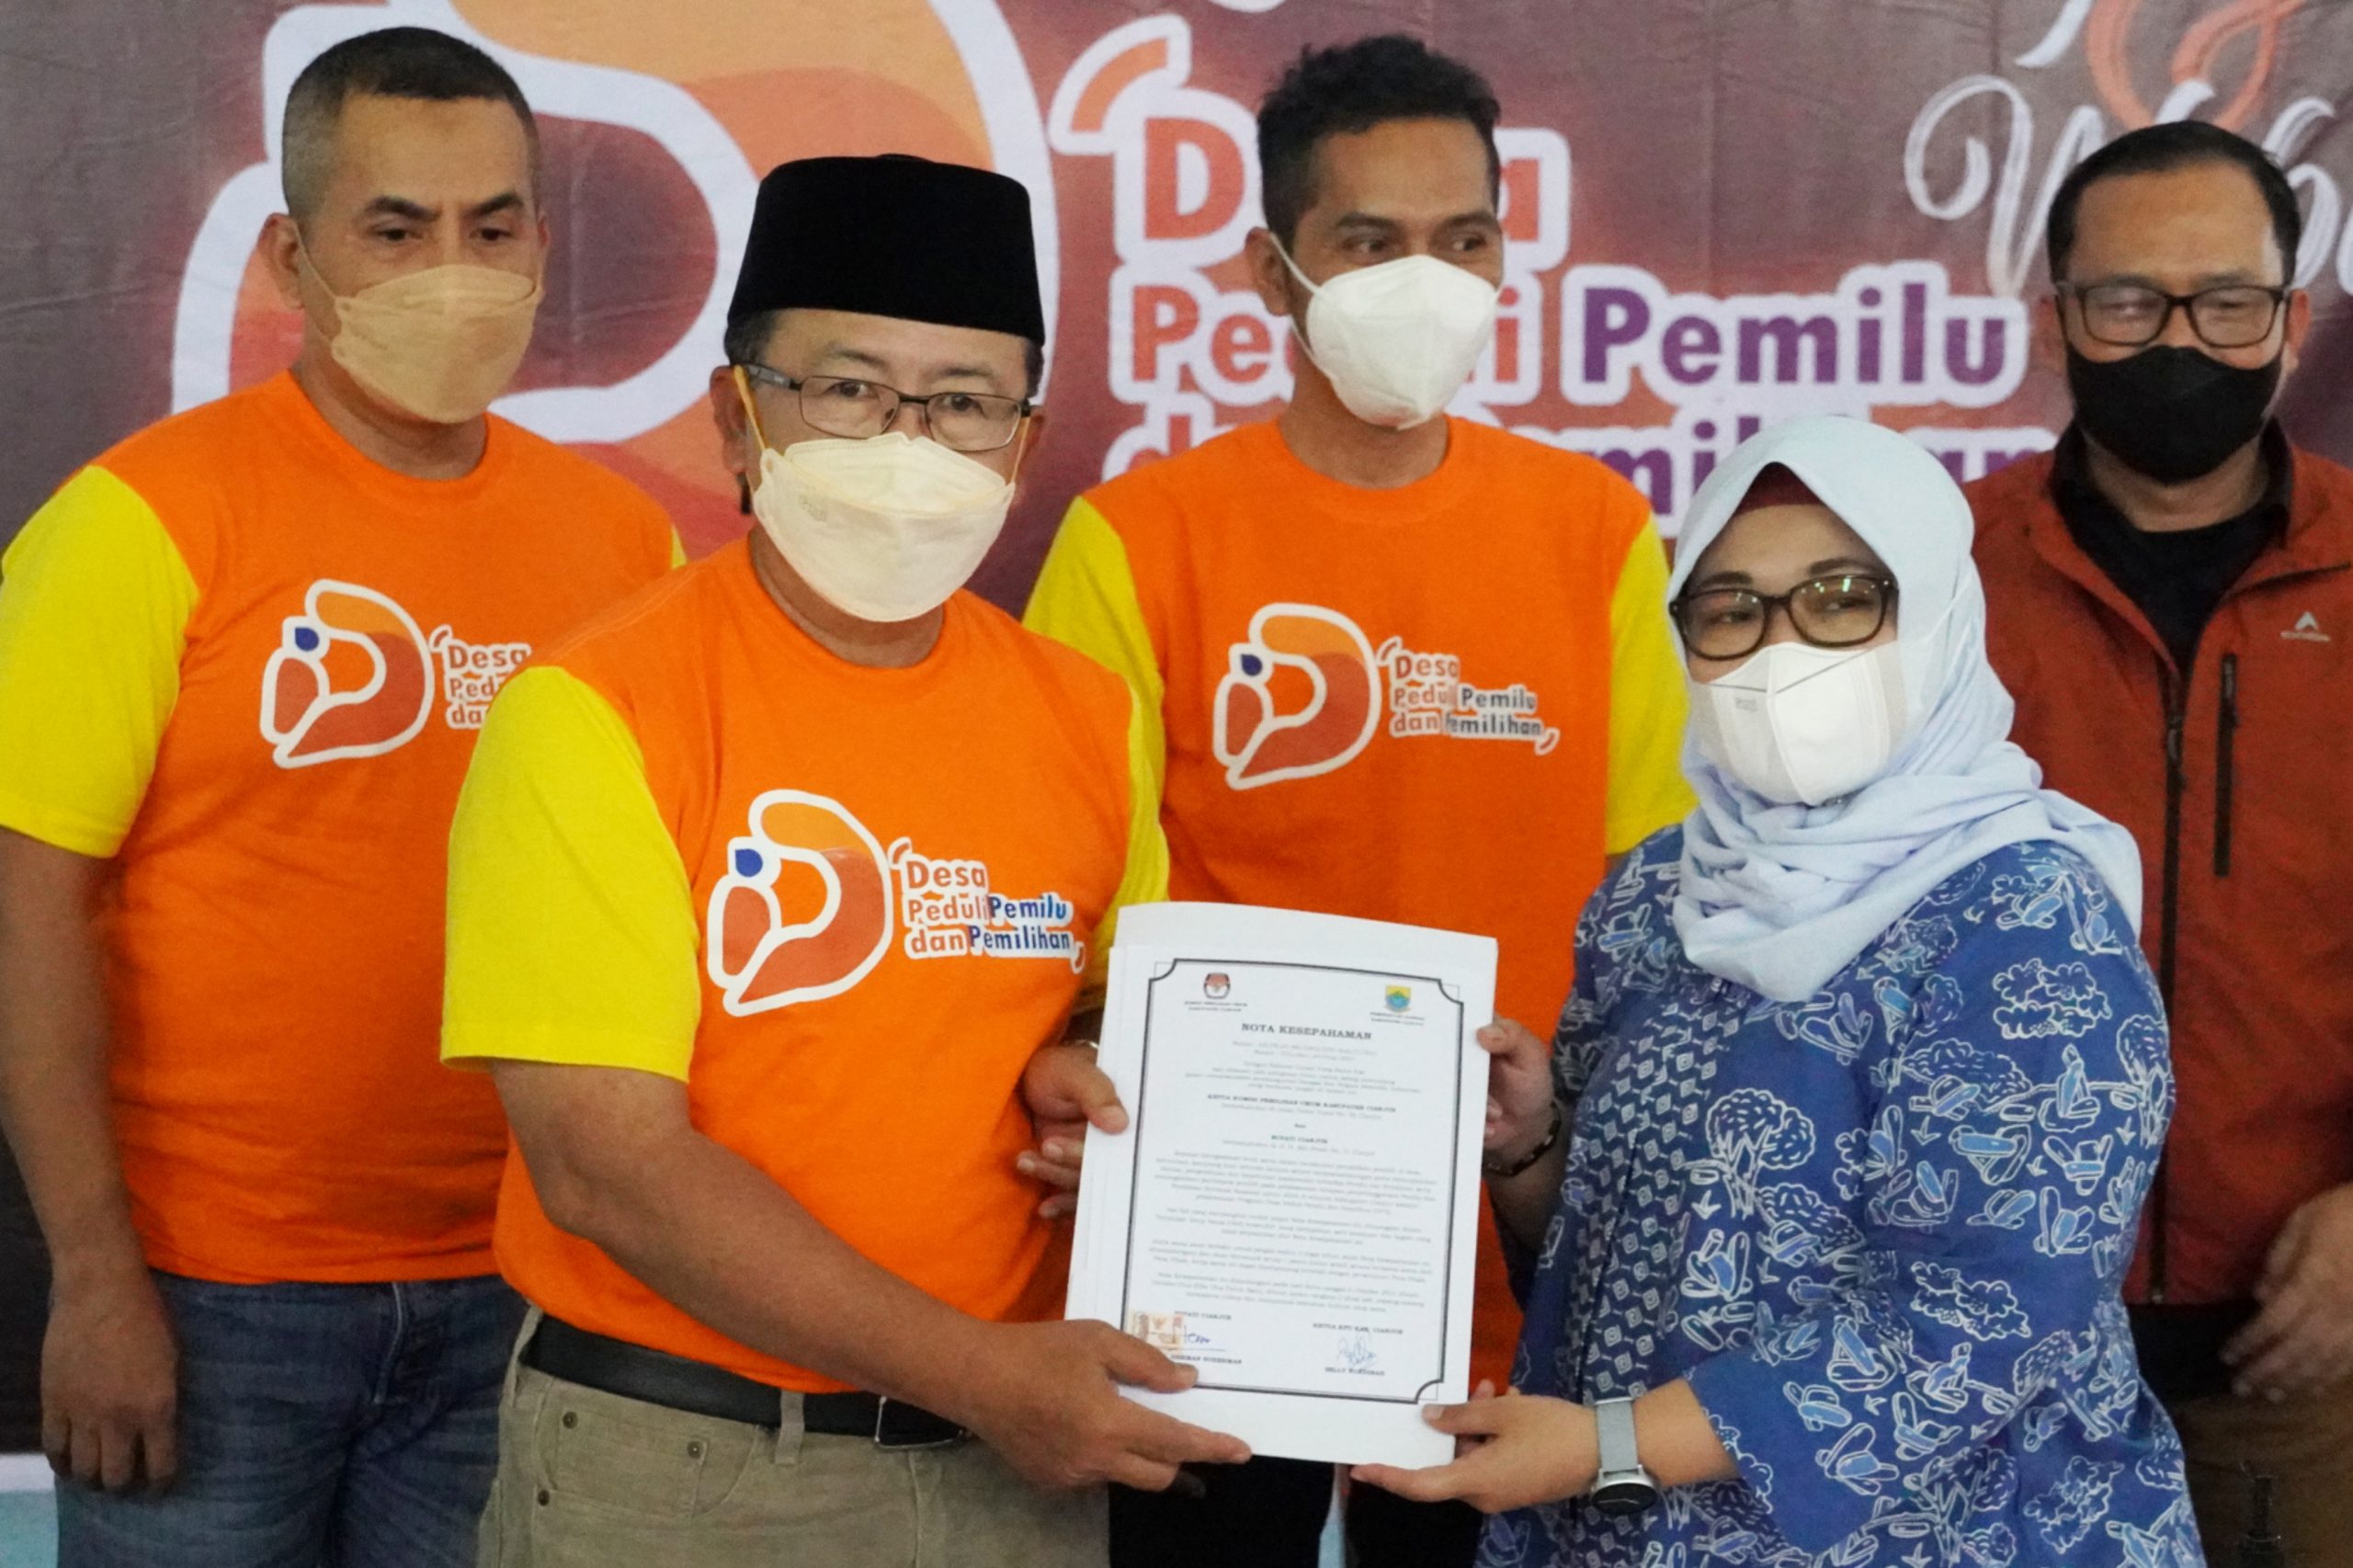  Tingkatkan Partisipasi Masyarakat Dalam Pemilu, KPU Cianjur Launching Program Desa Peduli Pemilu dan Pemilihan